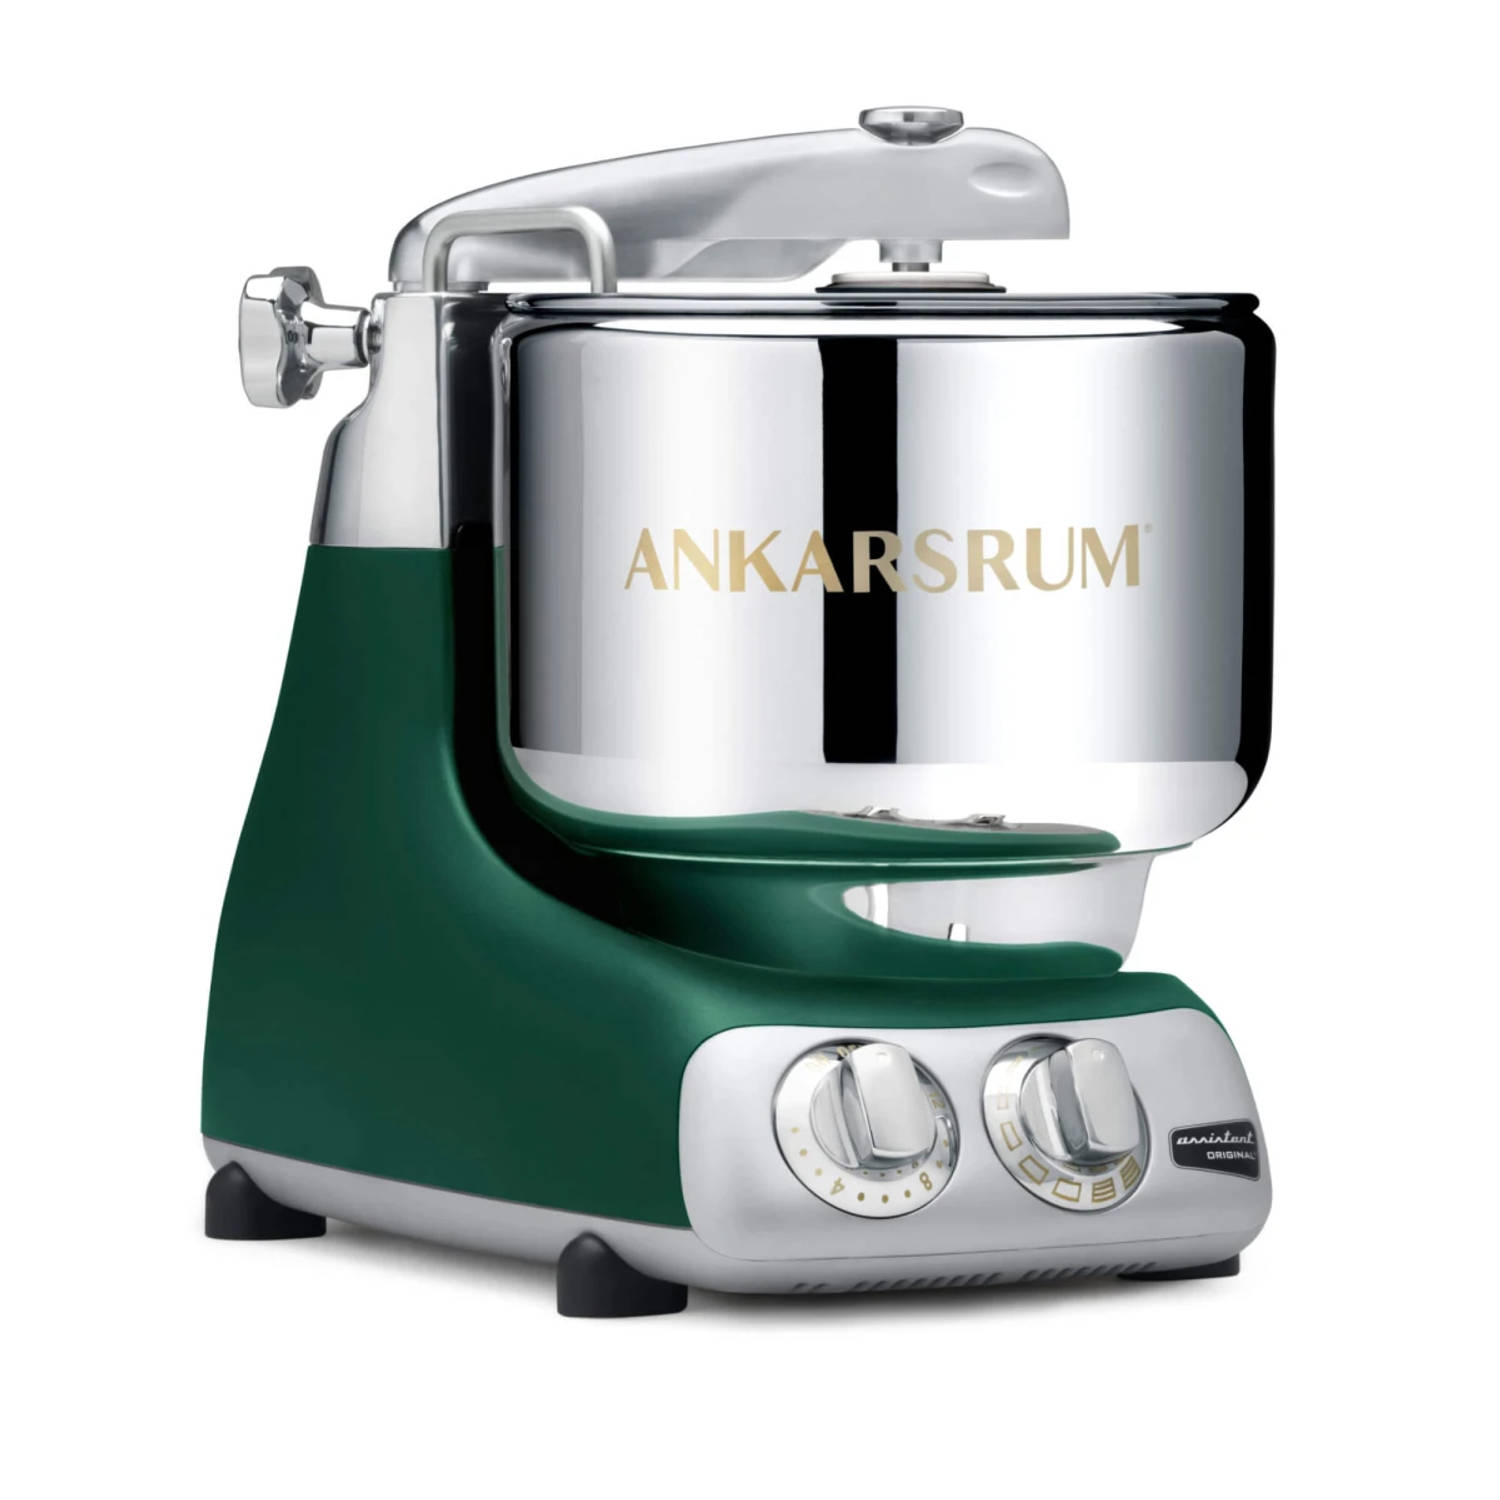 Ankarsrum Assistent Original AKR6230 keukenmachine - groen - 7 L